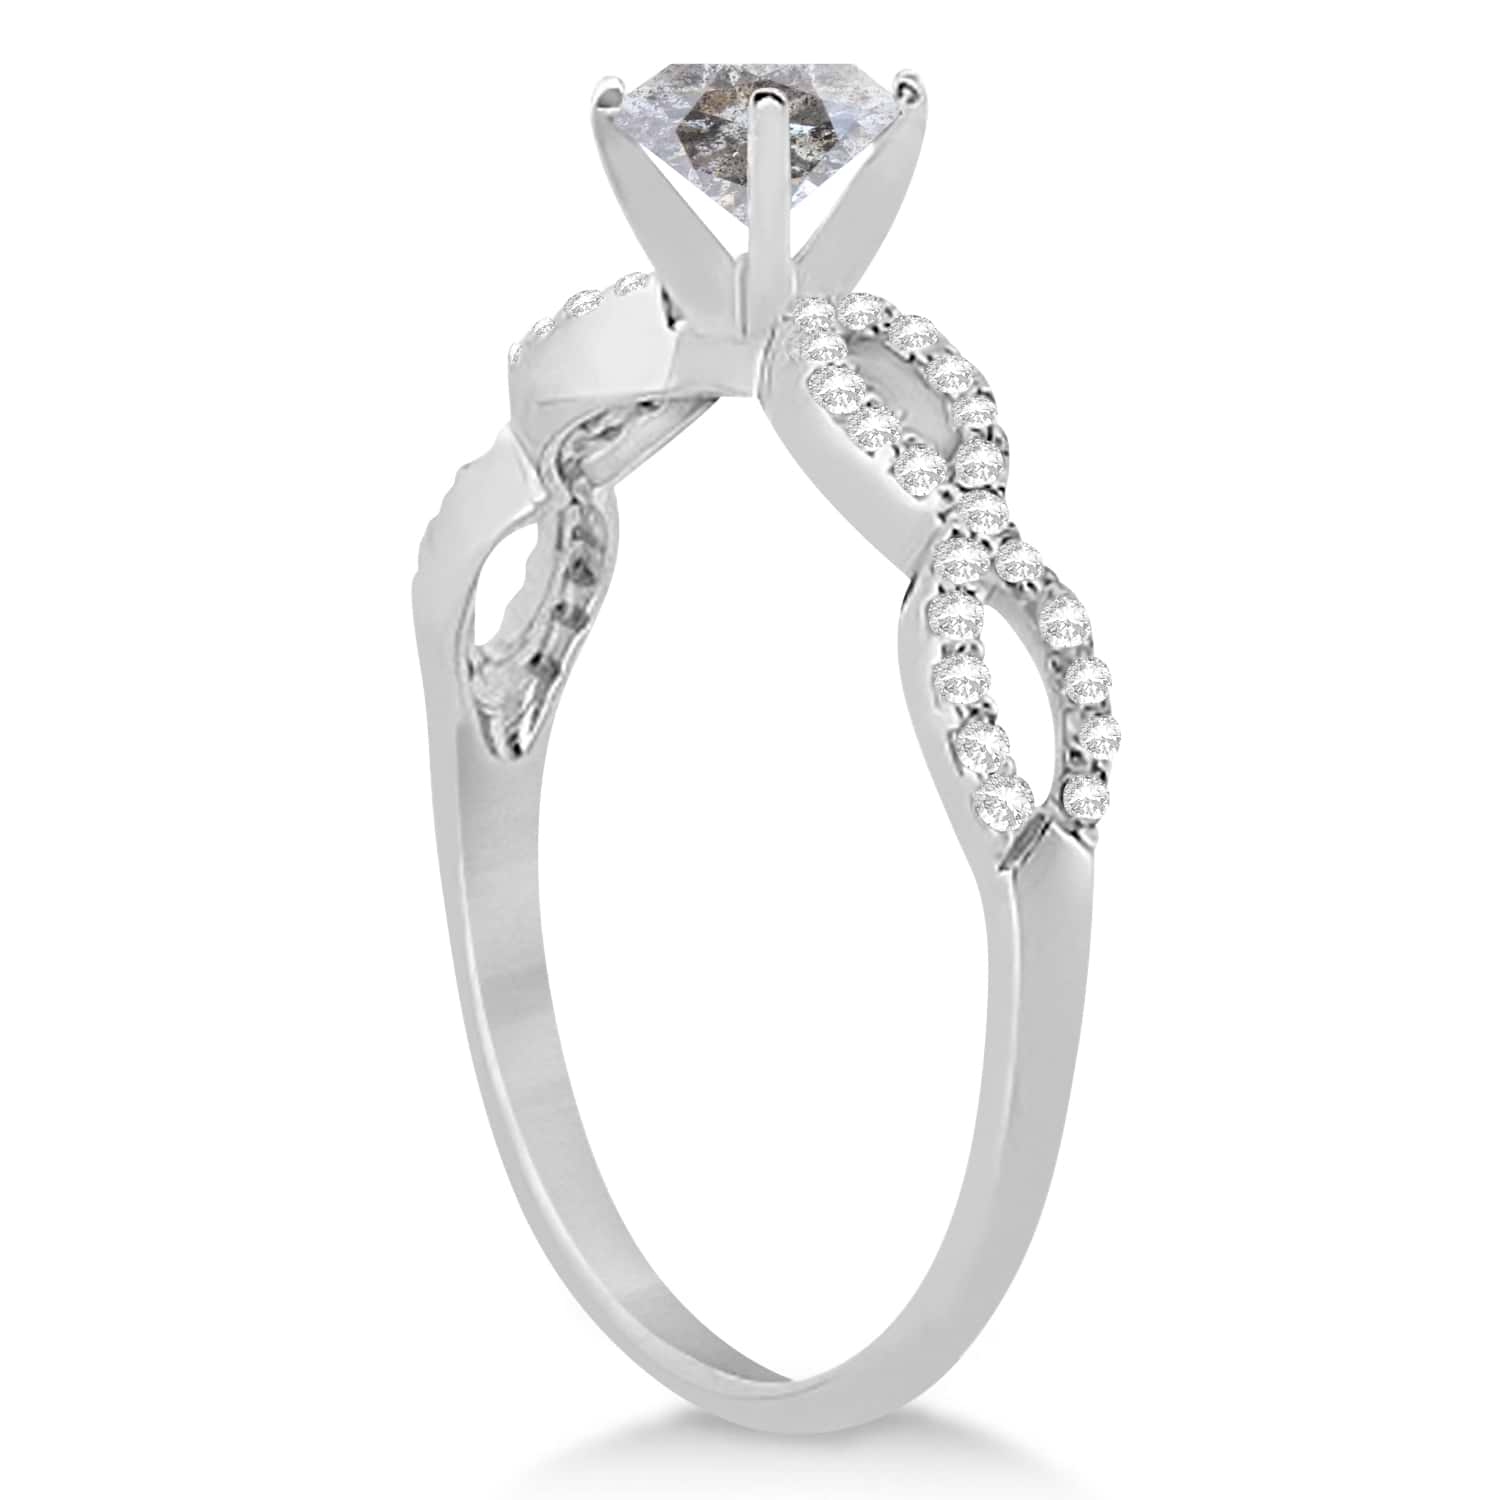 Infinity Cushion-Cut Salt & Pepper Diamond Engagement Ring 14k White Gold (0.50ct)